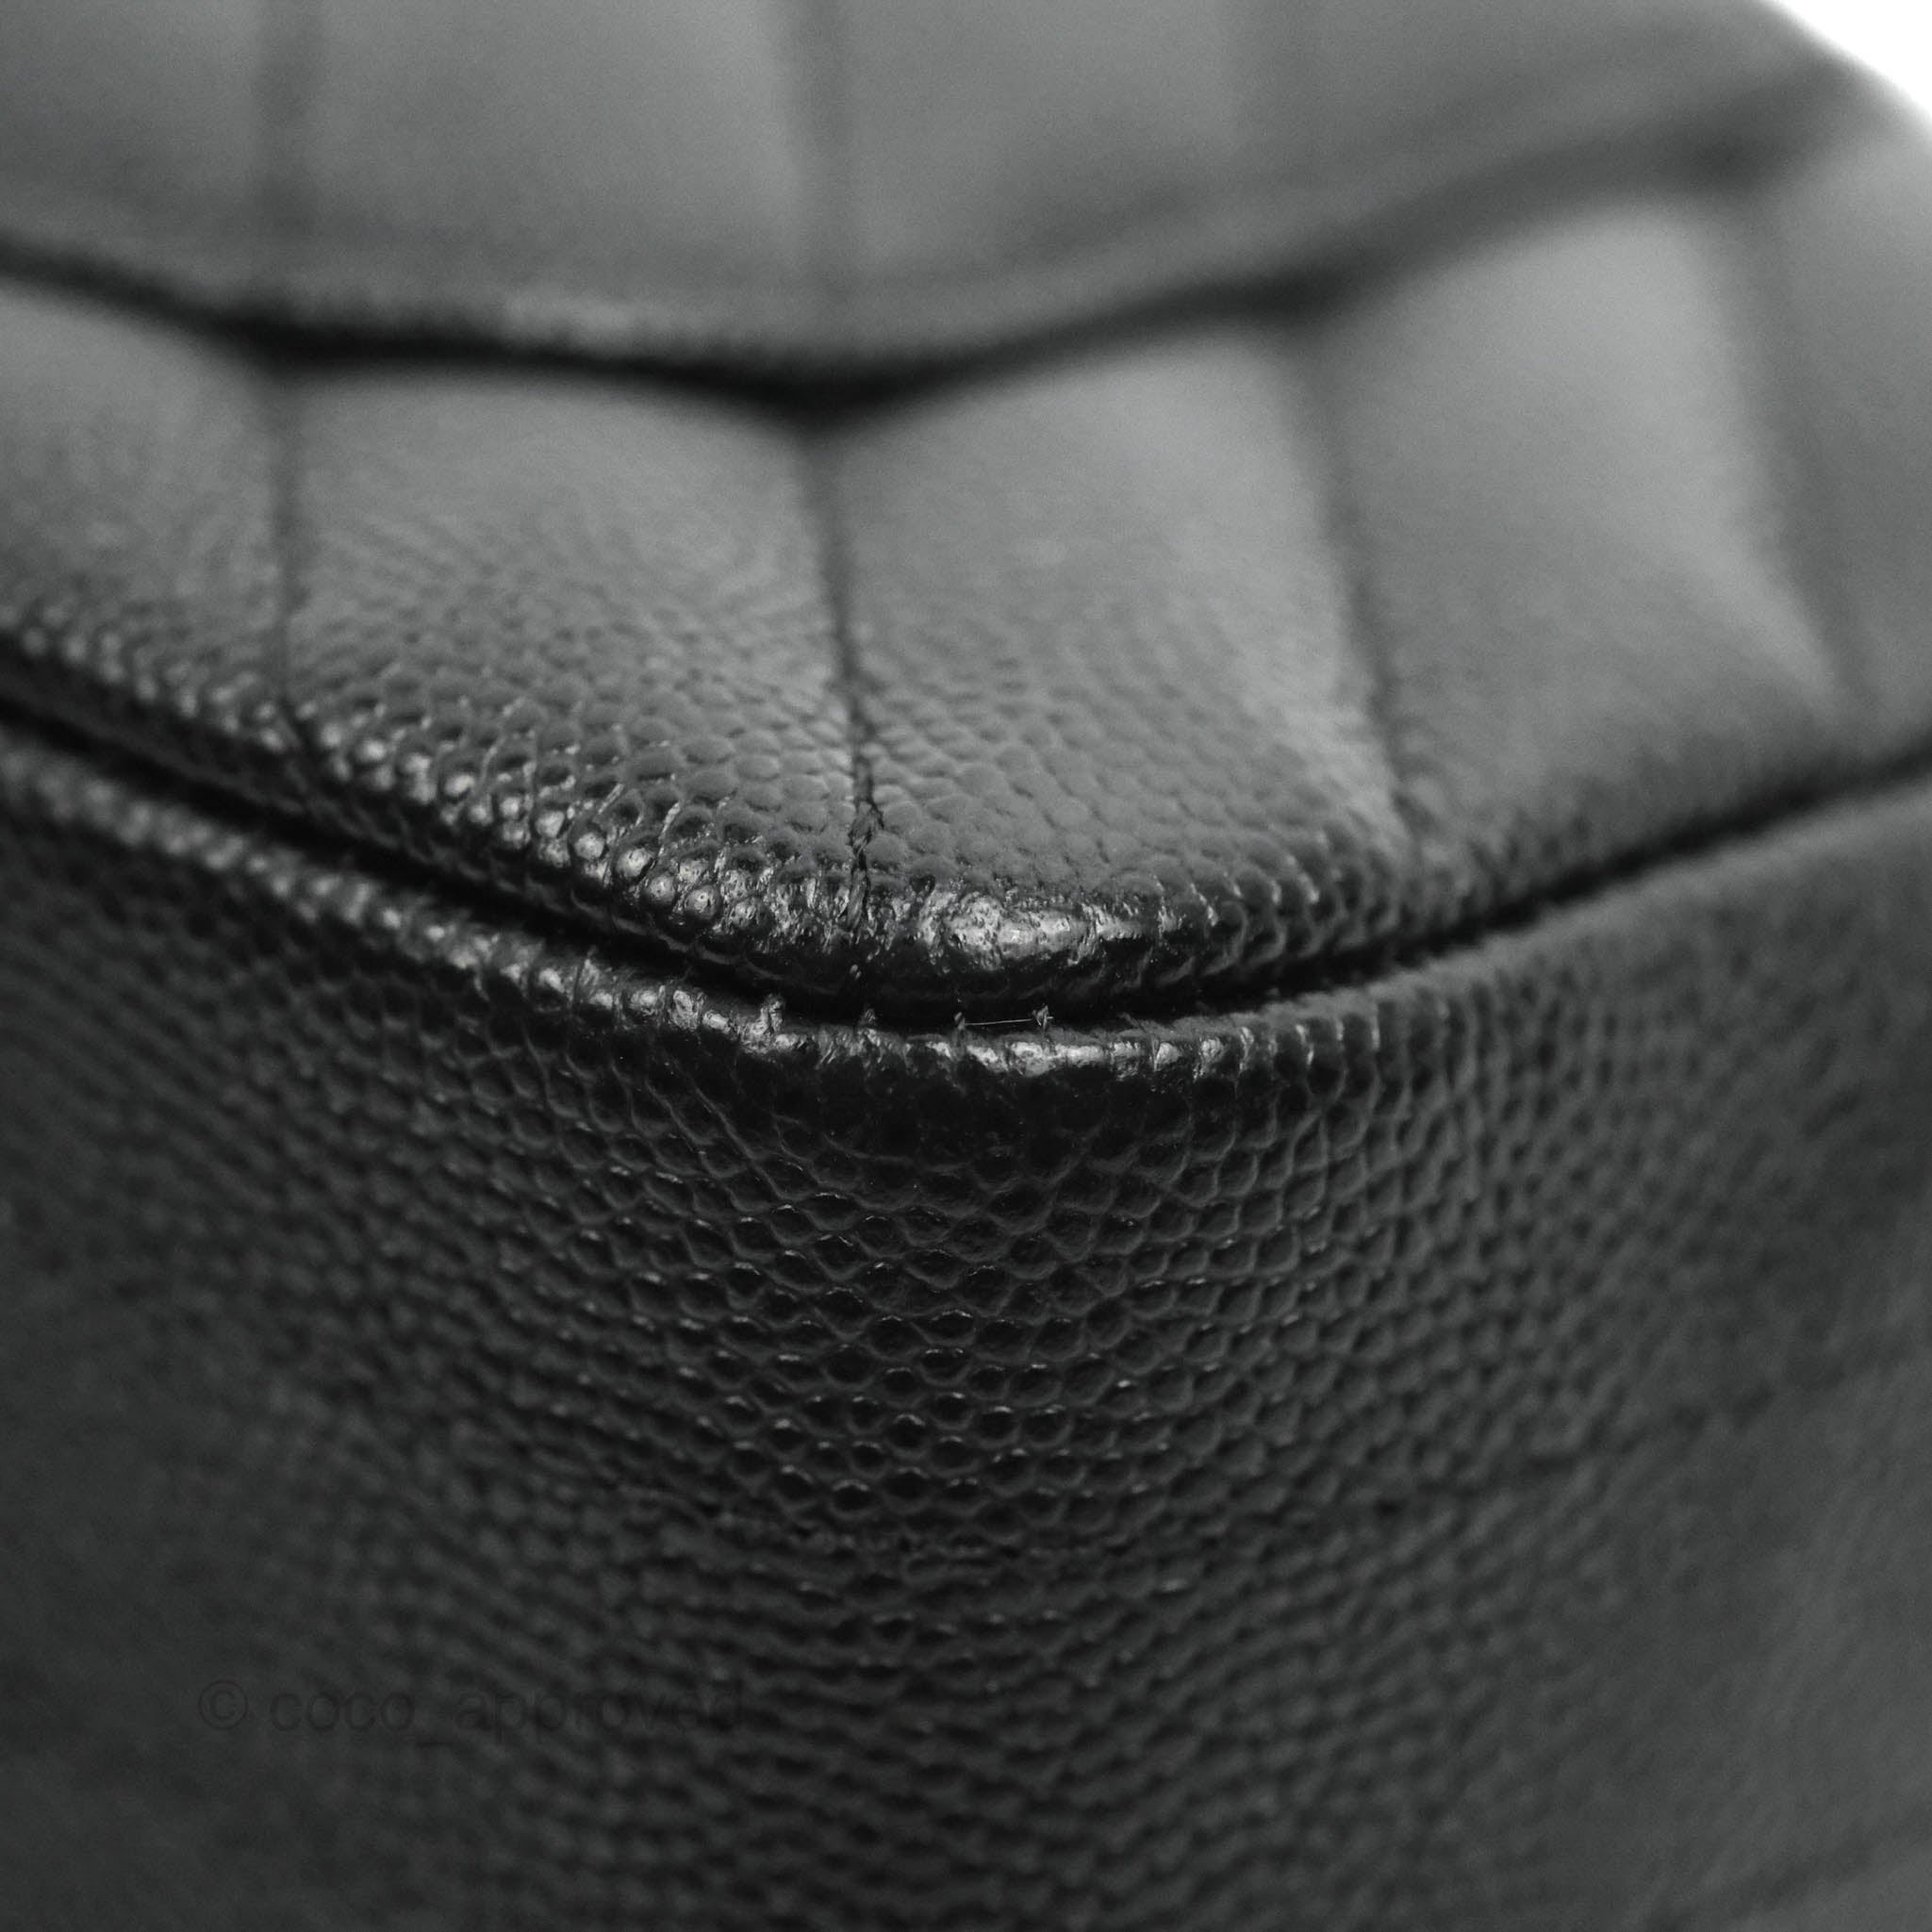 Classic Rectangular Mini Chevron Flap Bag » Luxury Fashion Rentals